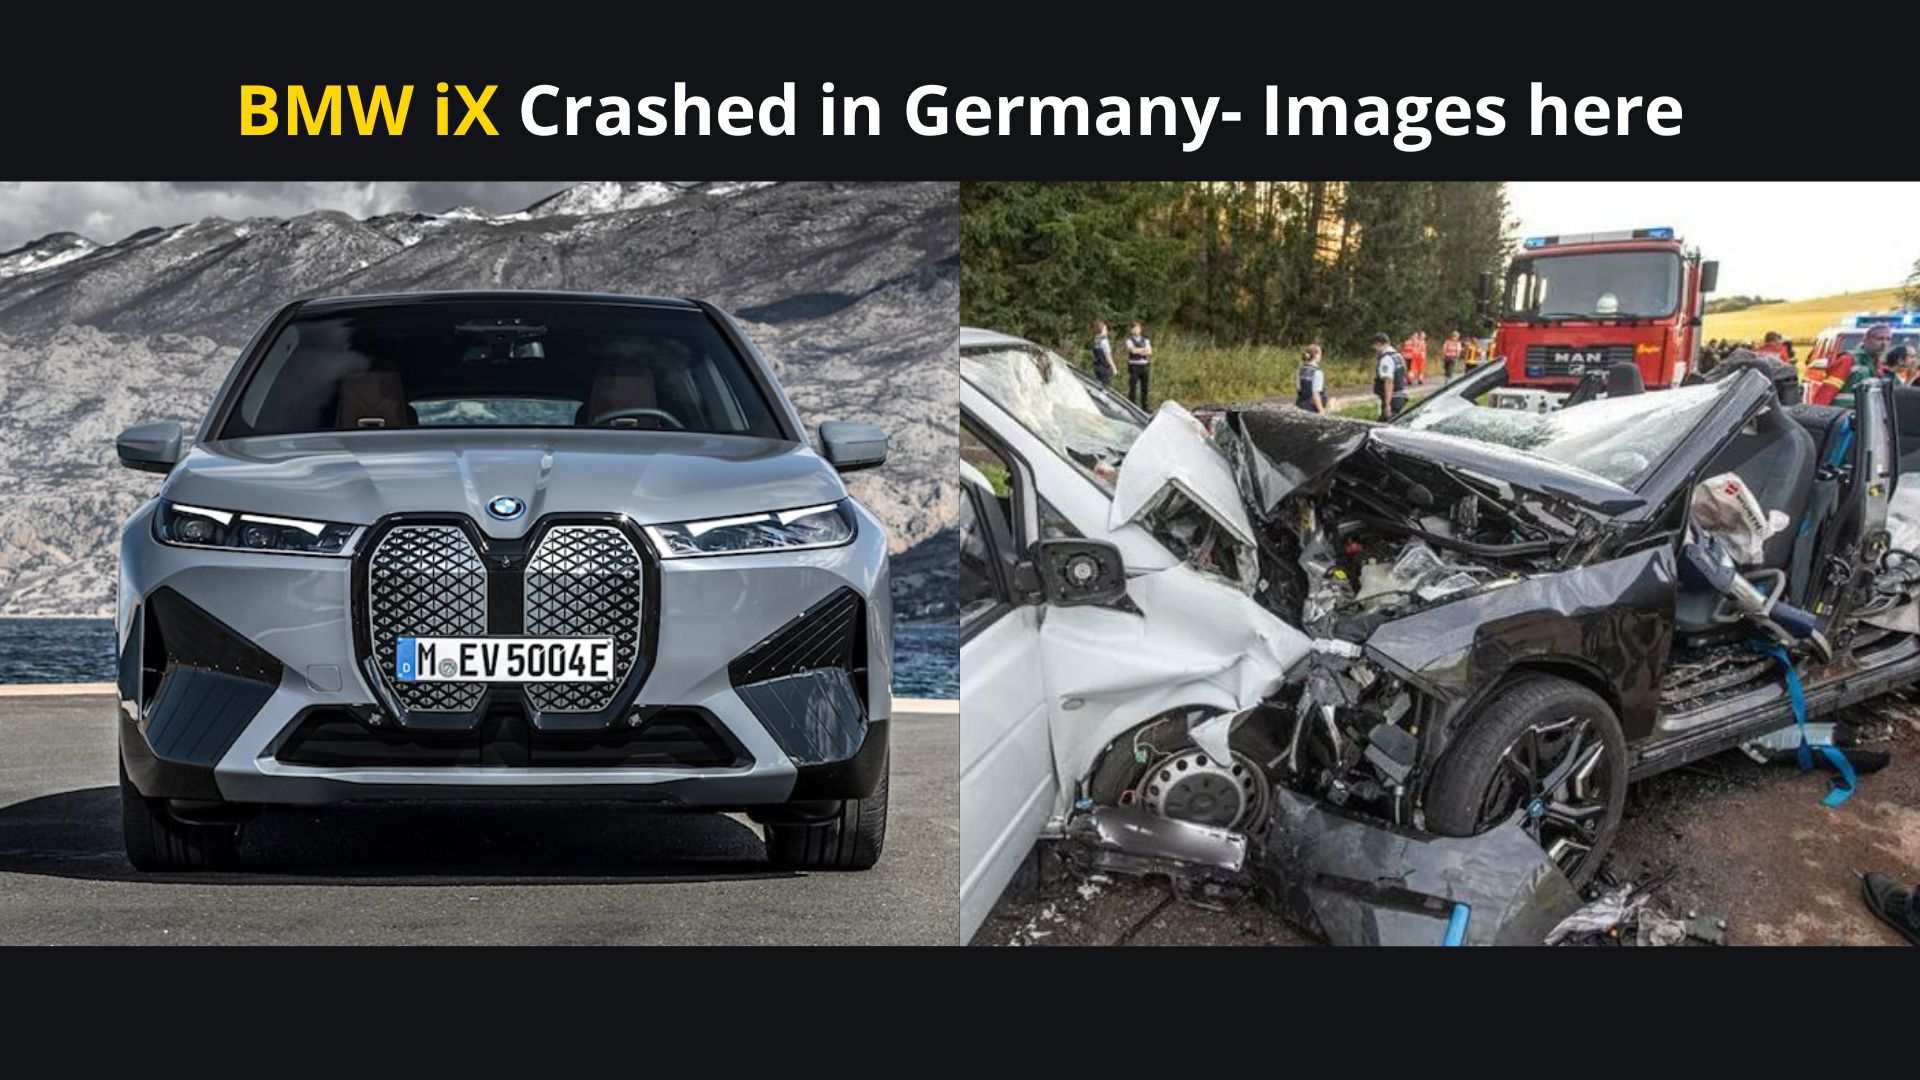 https://carandbike24.com/bmw-ix-crashed-in-germany-images-here/